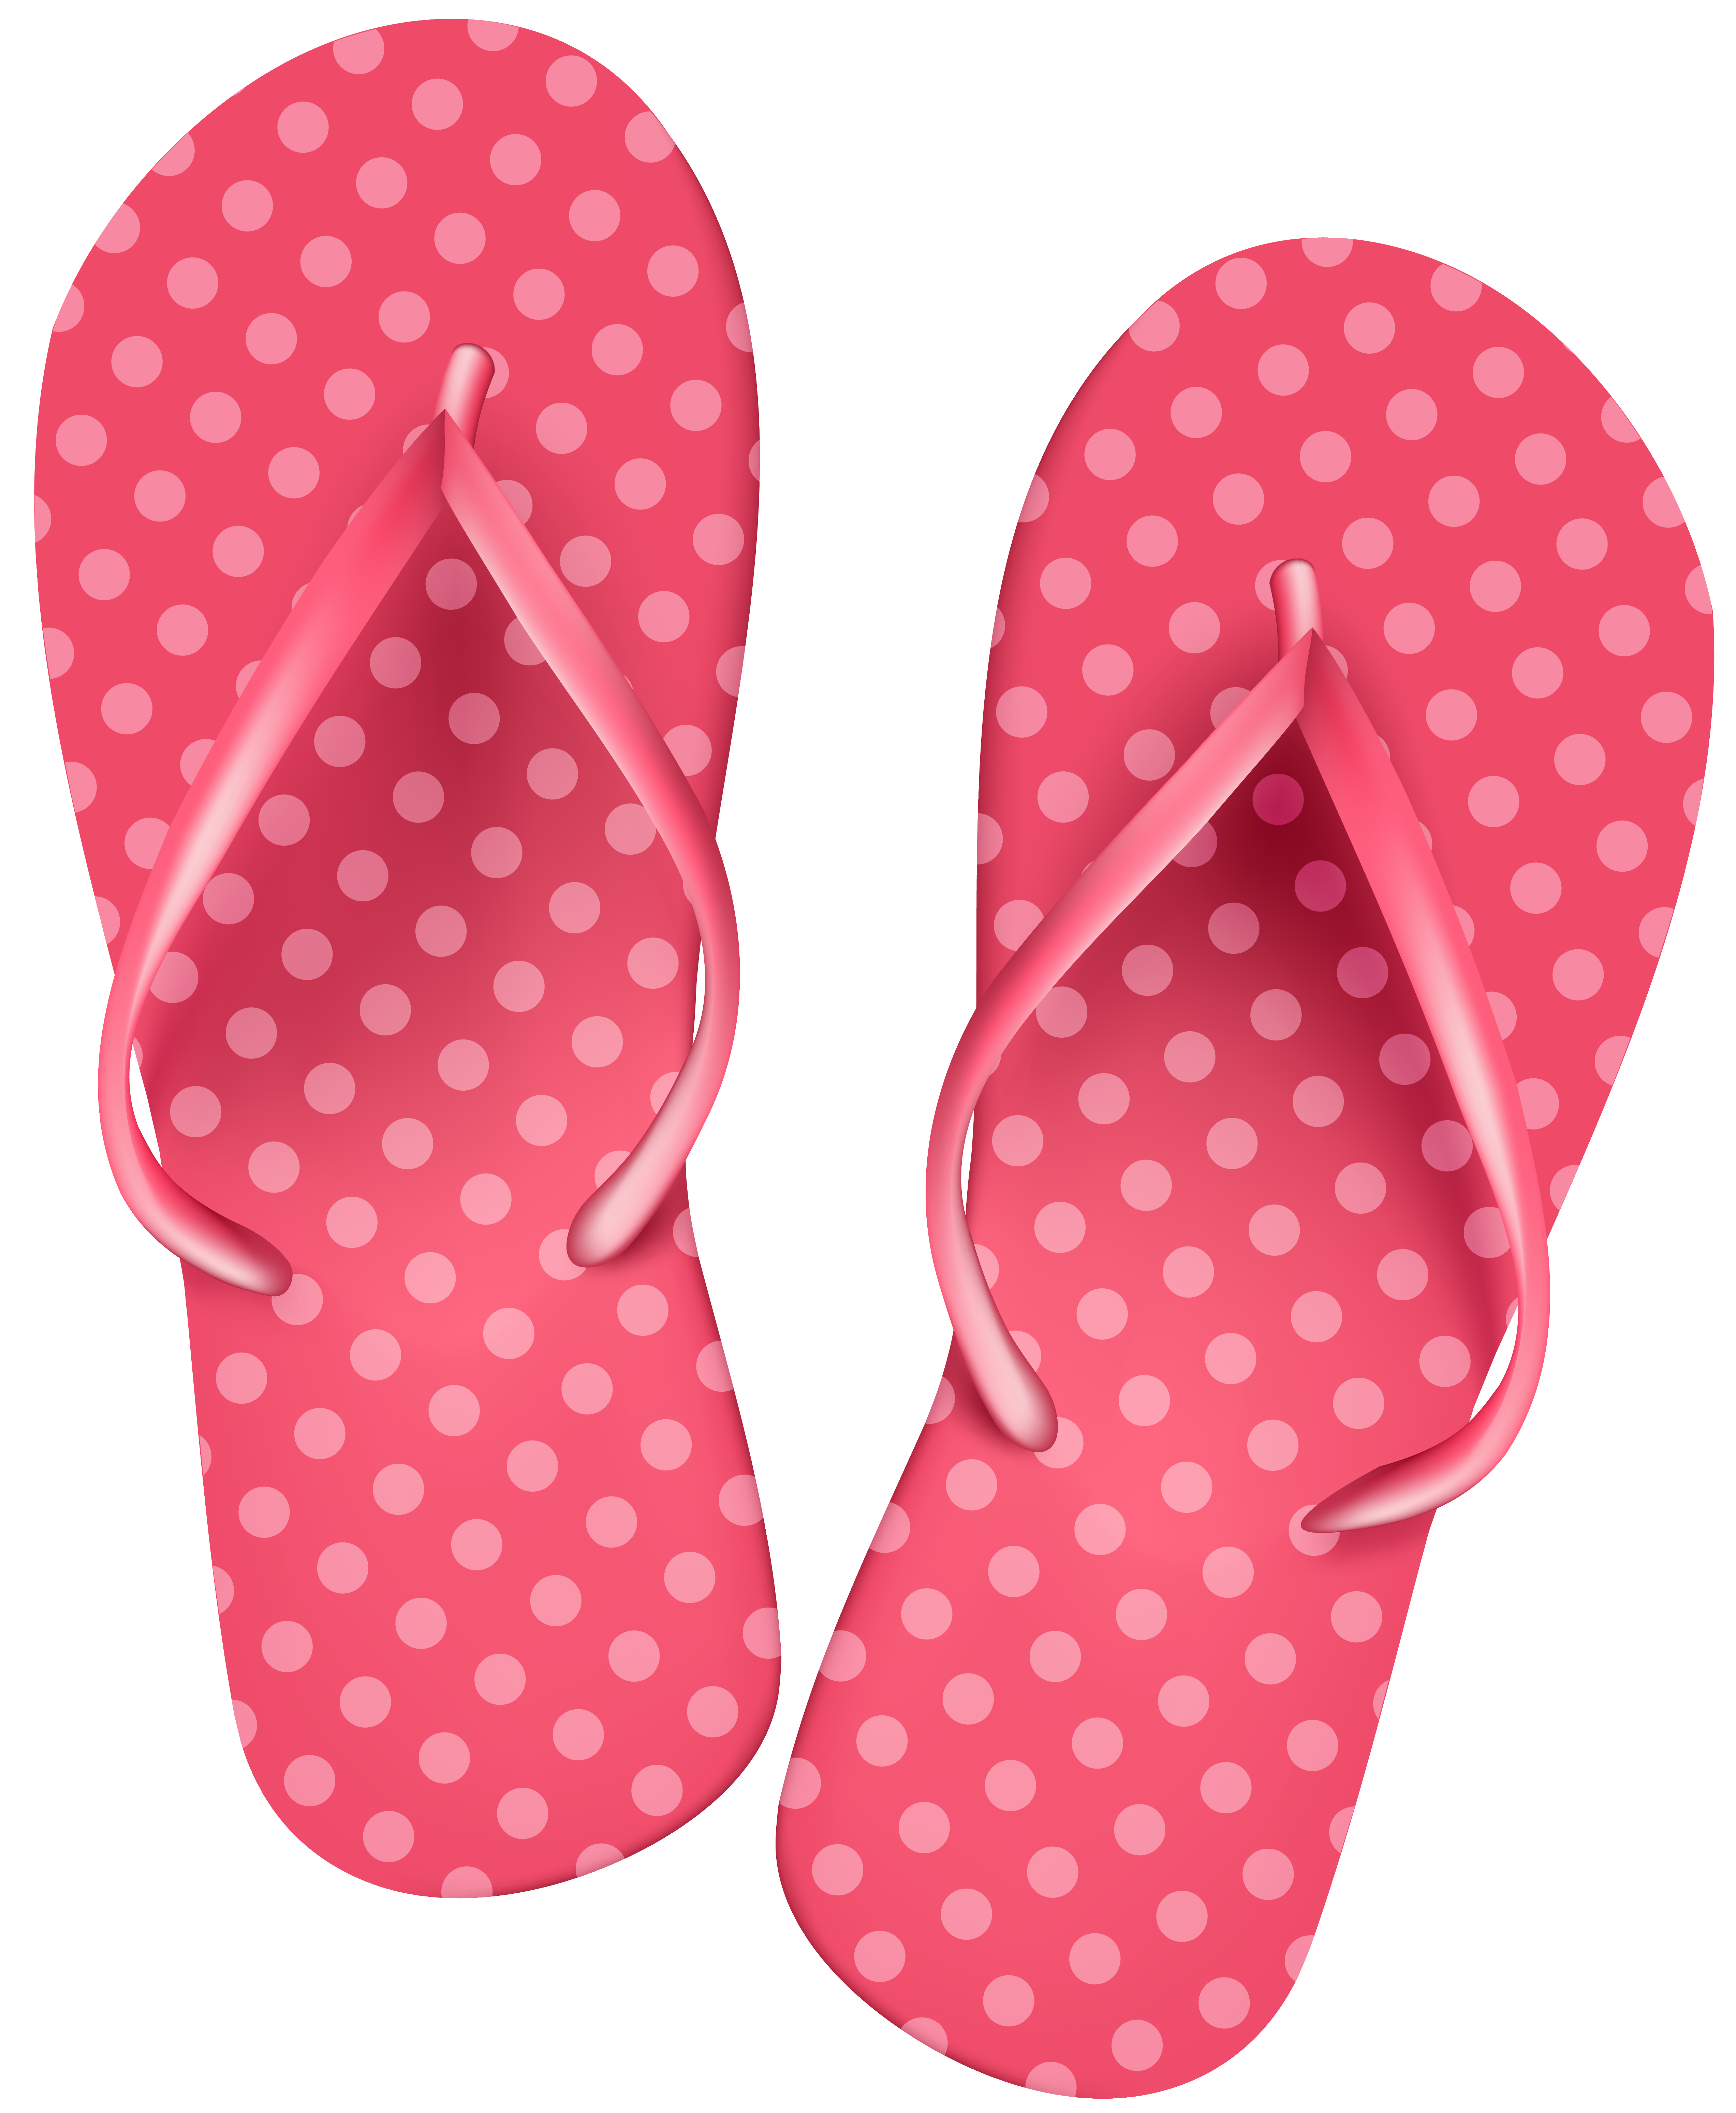 Pink Flip Flops Image Free Download Png Clipart